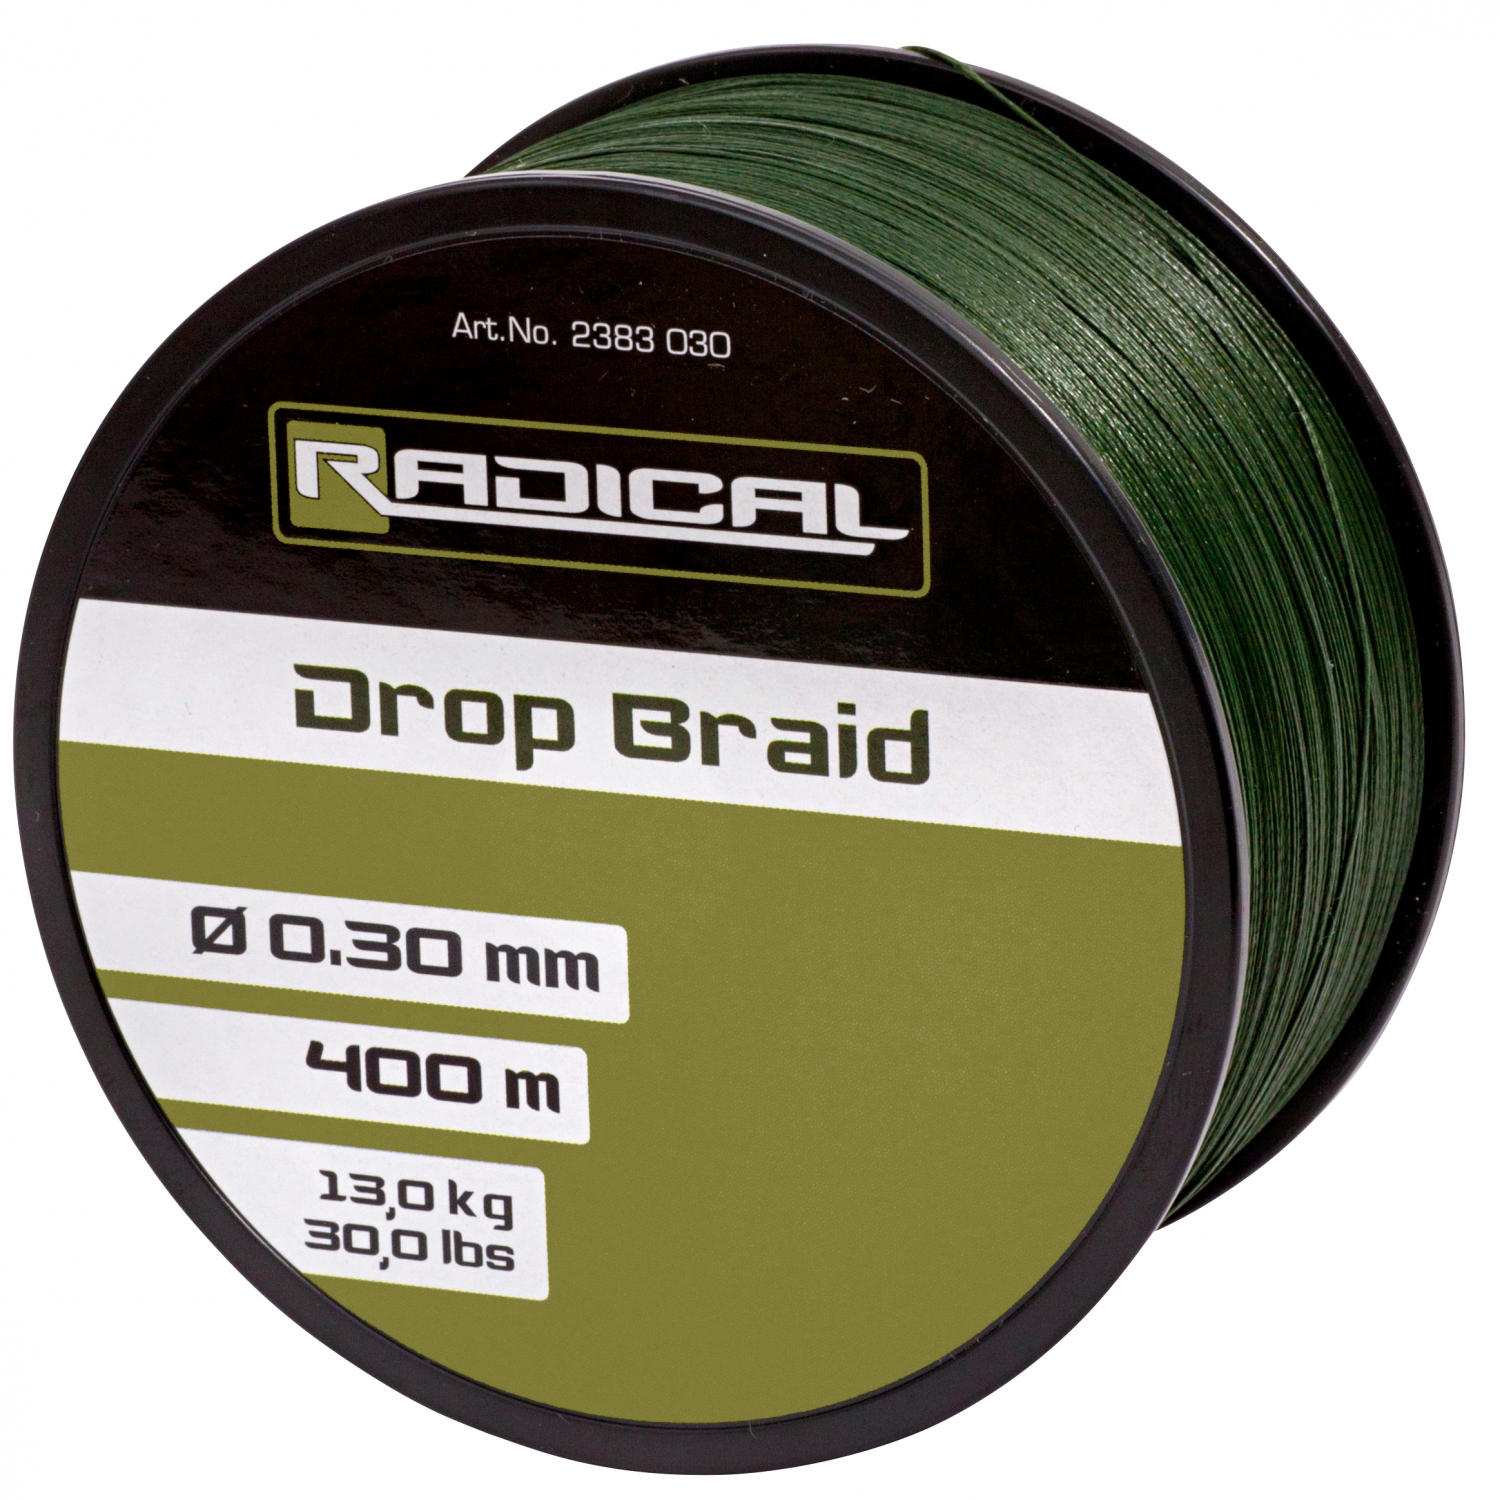 Quantum Radical Fishing Line Radical Drop Braid (dark green) at low prices